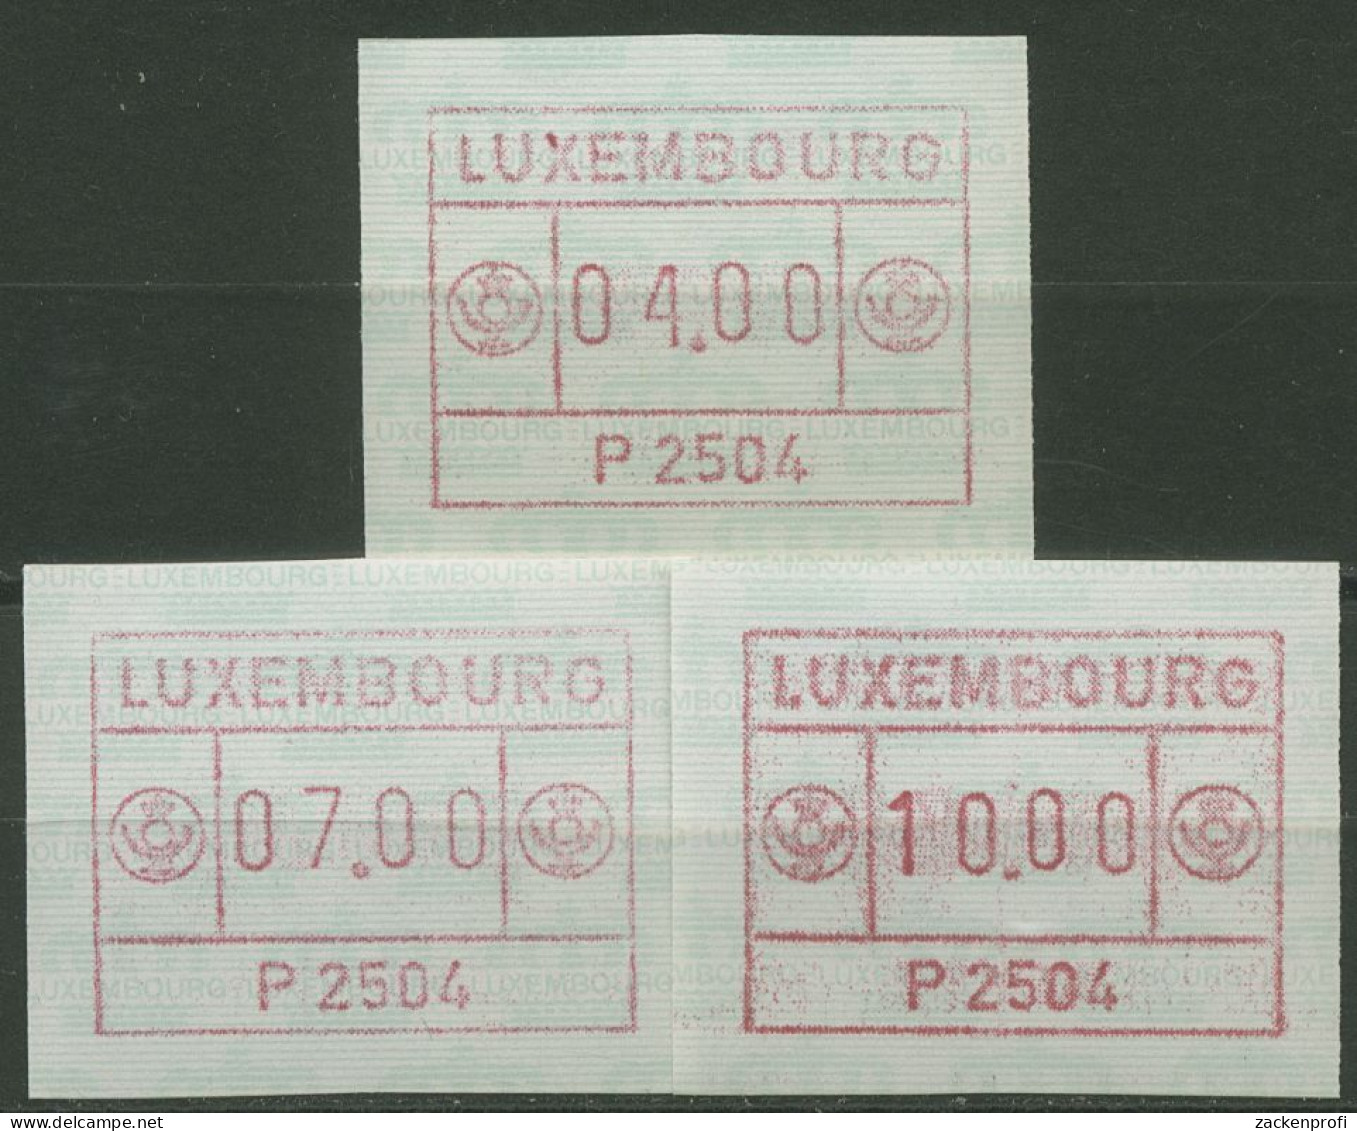 Luxemburg 1983 Automatenmarke Automat P 2504 Satz 1.4 B S1 Postfrisch - Automatenmarken